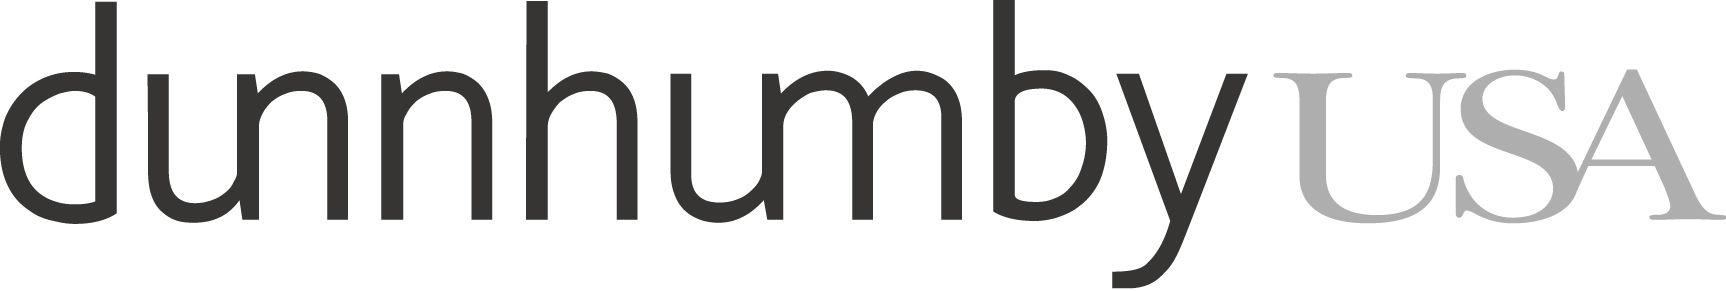 Dunnhumbyusa Logo - Loyalty360 - Loyalty360 Members and Sponsors